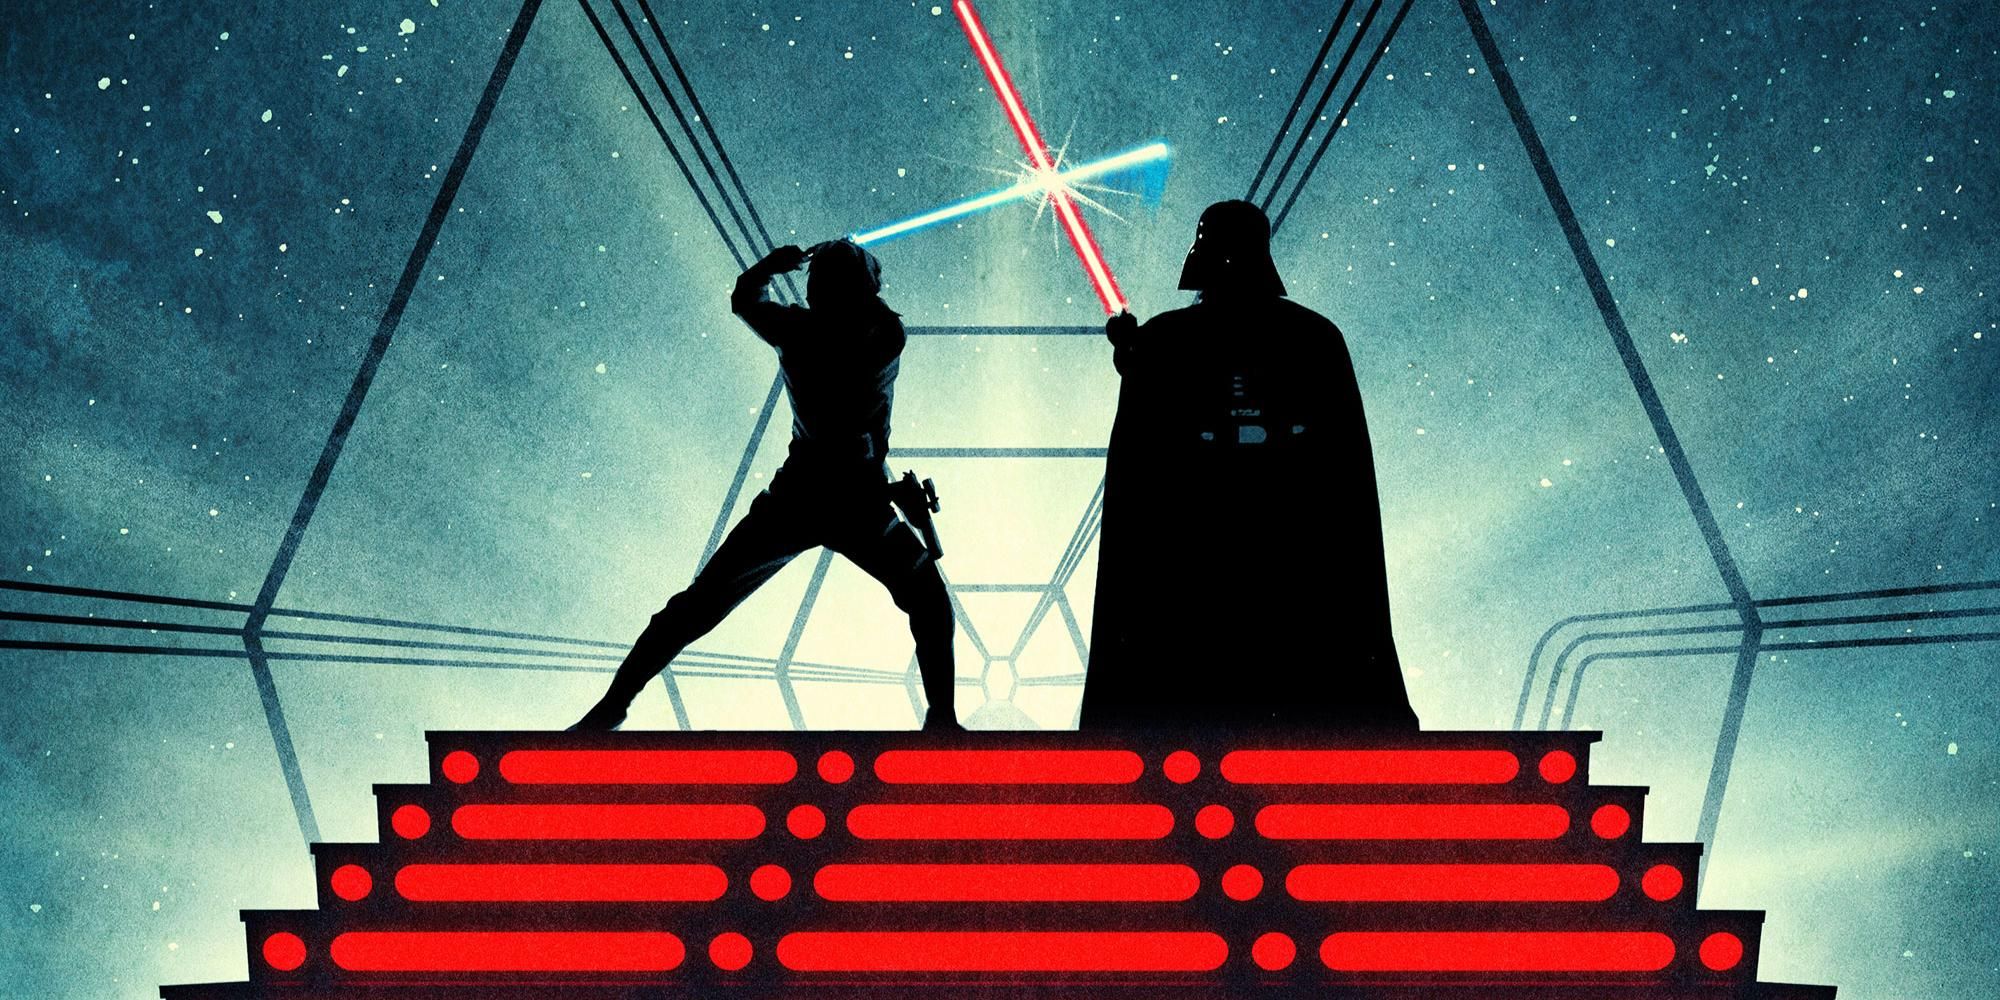 Empire Strikes Back 40th Anniversary Poster